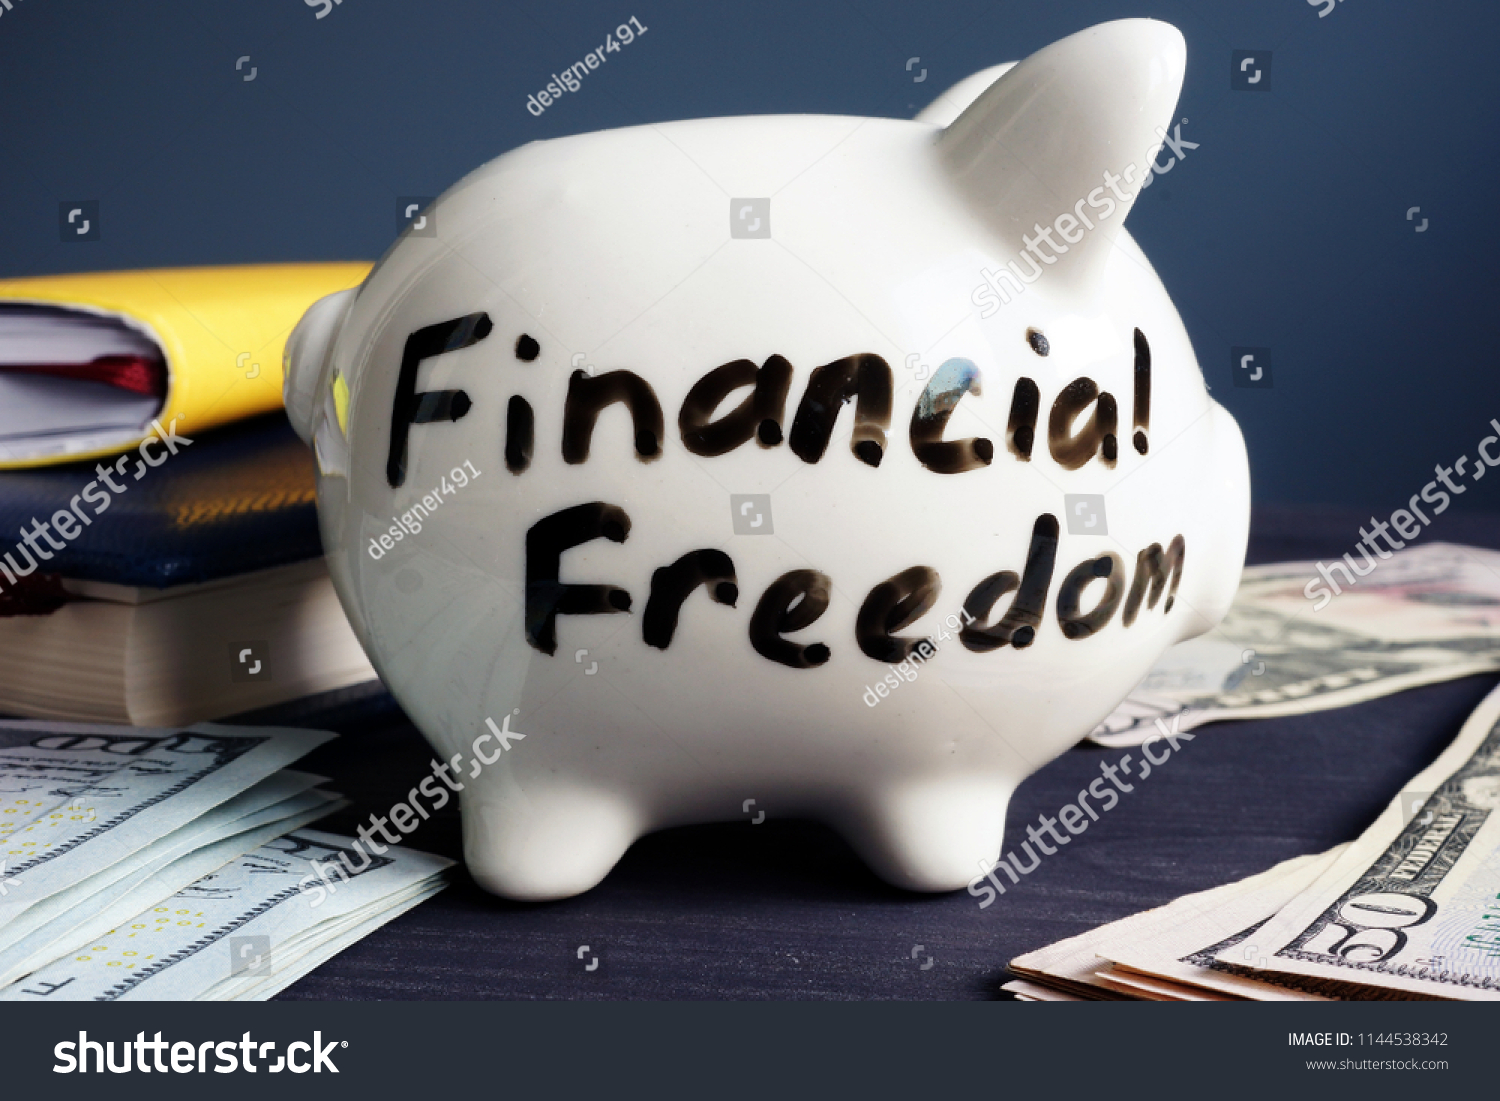 Financial freedom written on a side of piggy bank. #1144538342